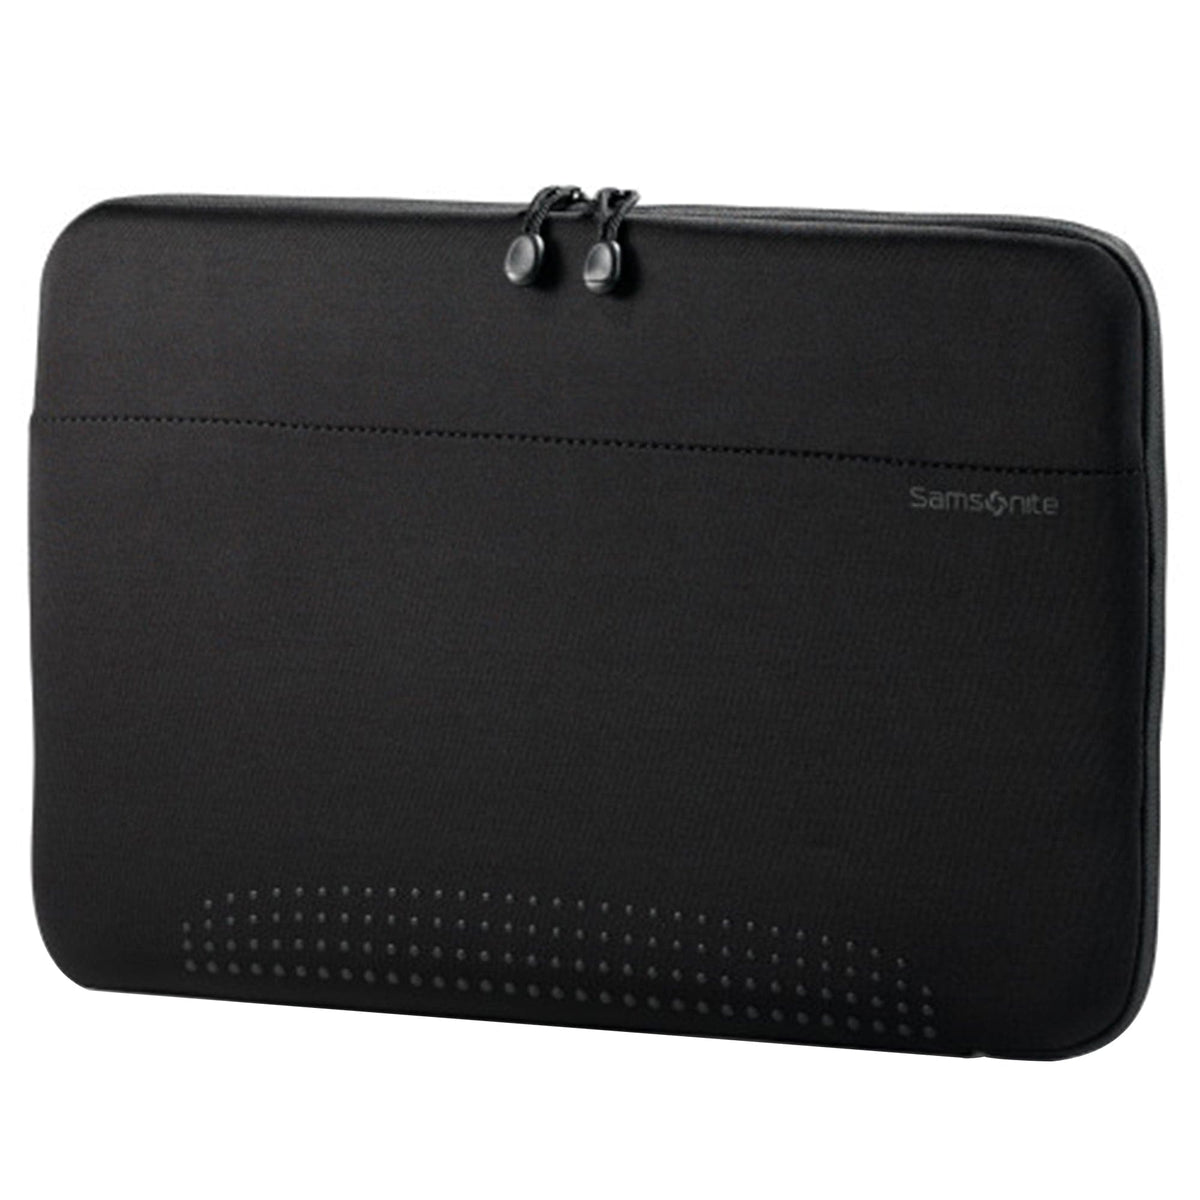 Samsonite Aramon 15.6" Laptop Sleeve Bag